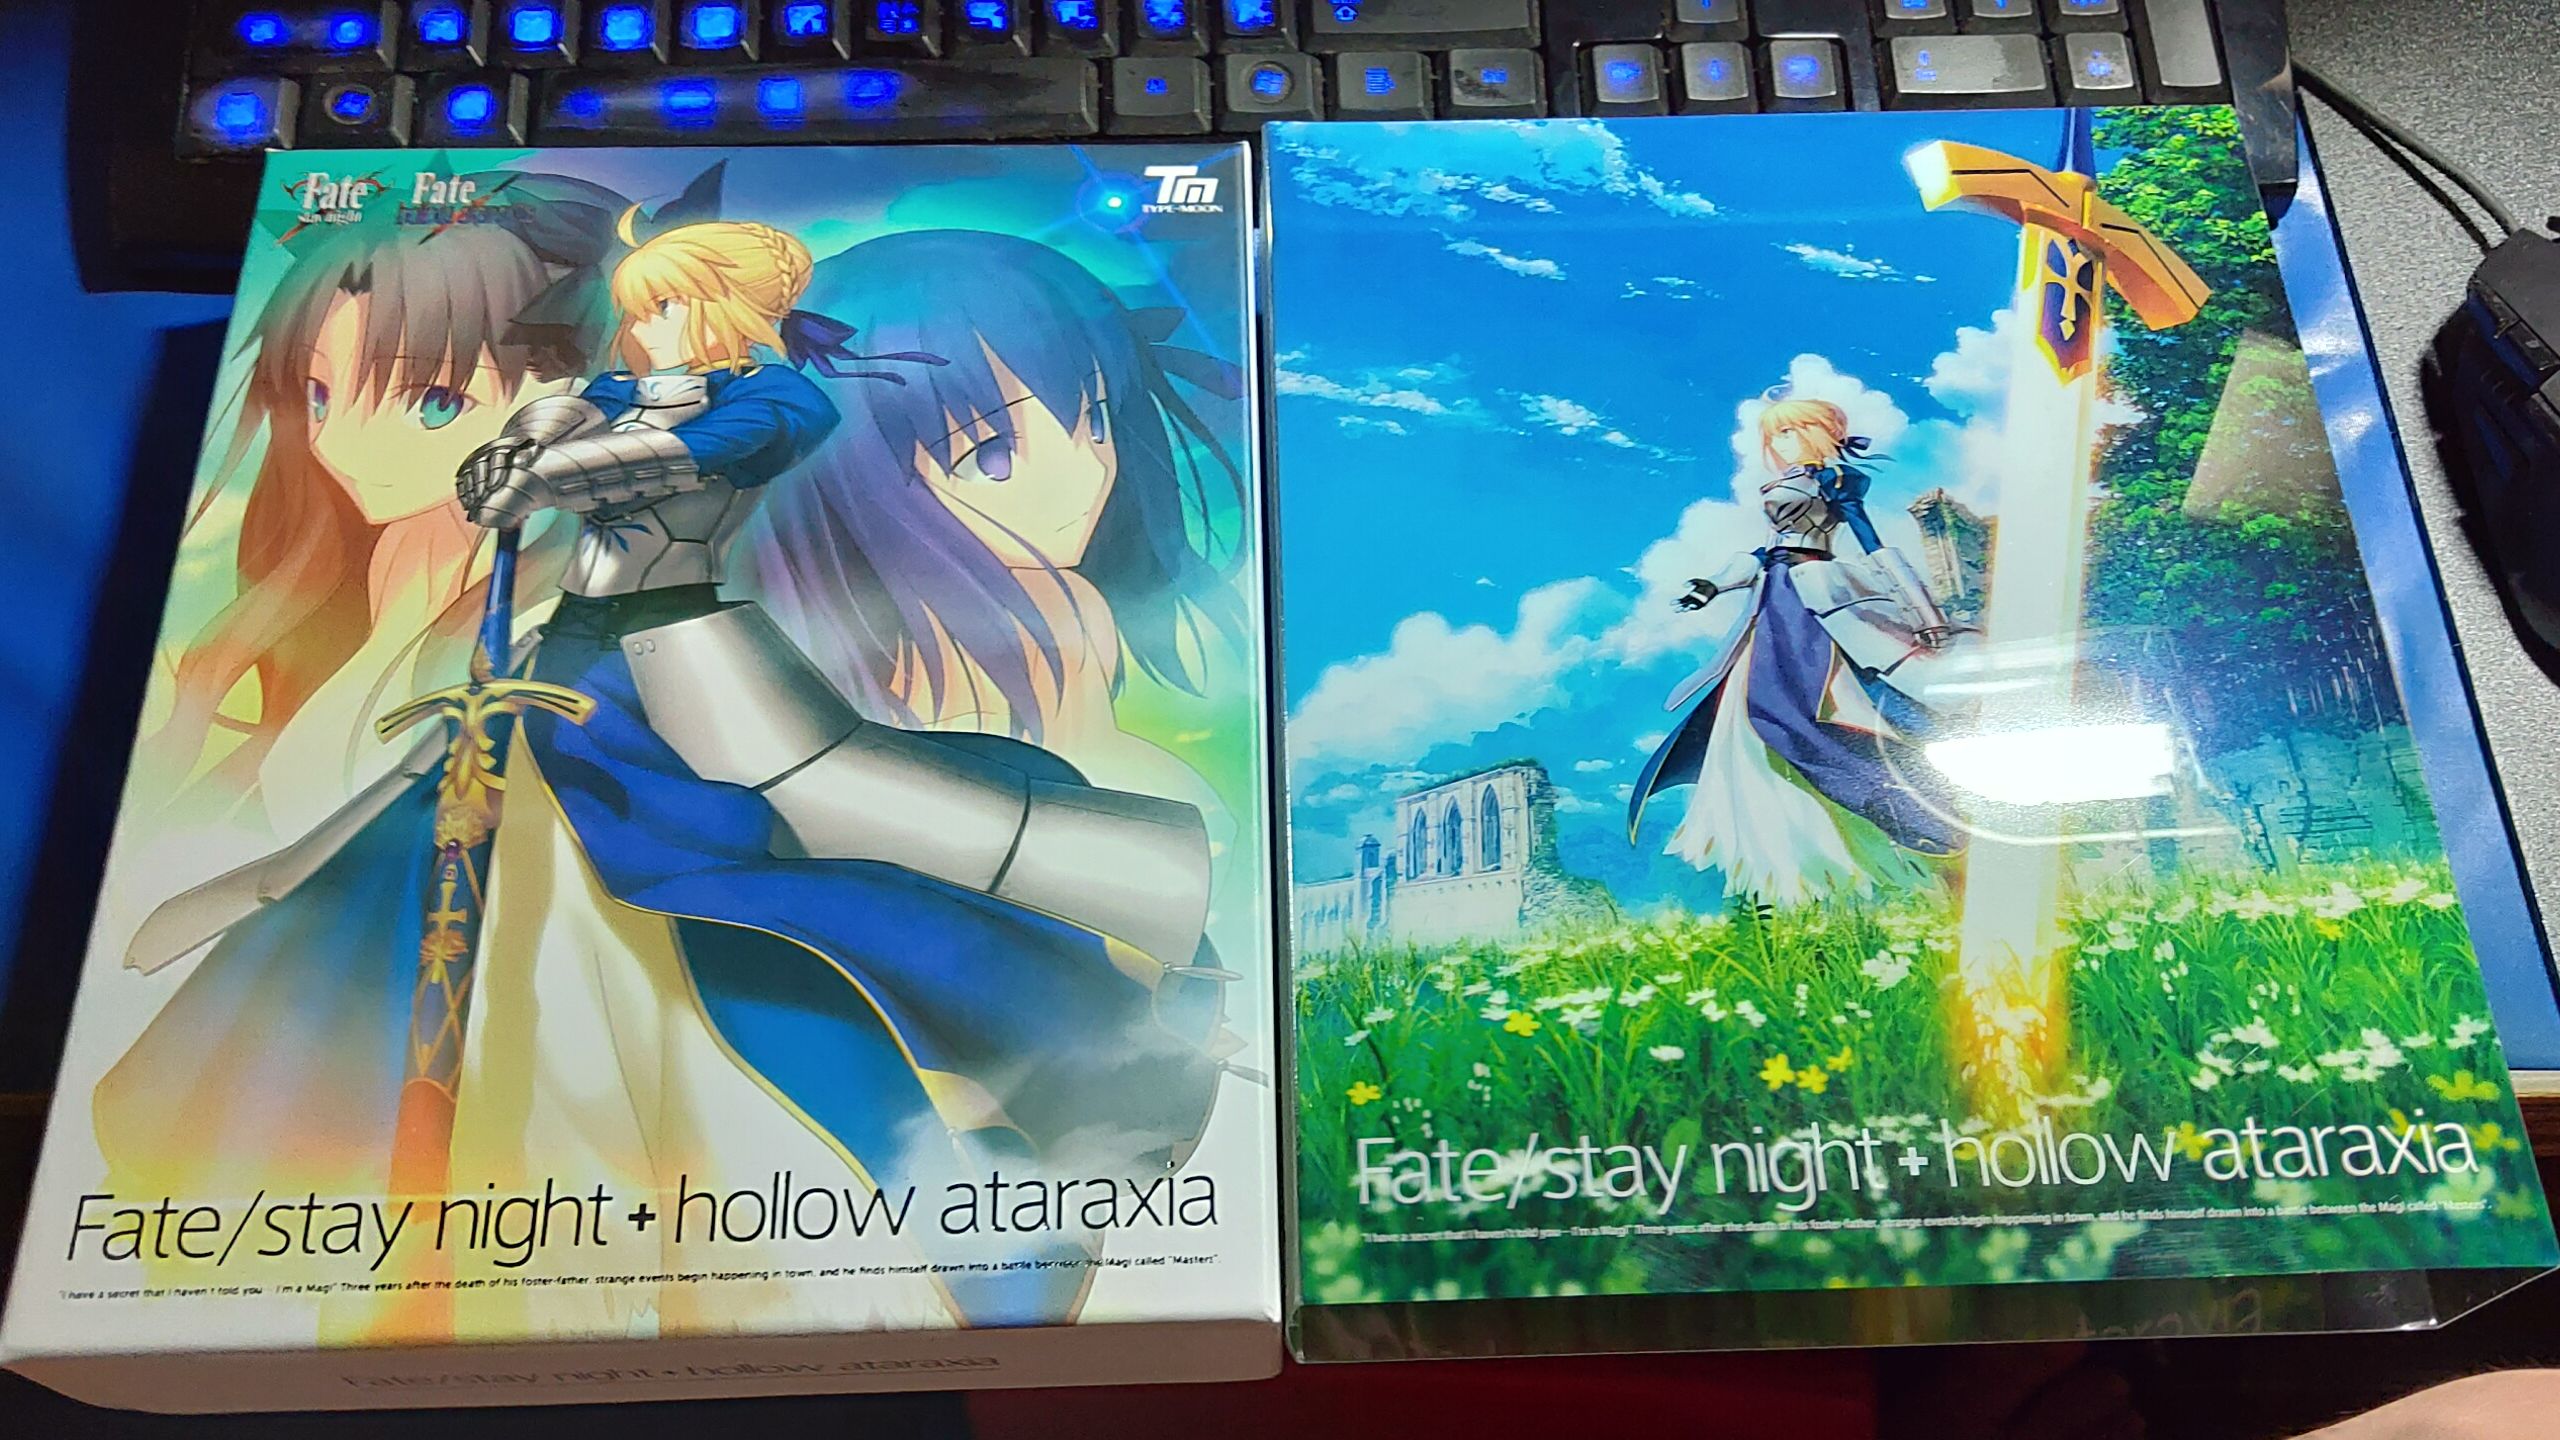 Fate / stay night + hollow ataraxia 復刻版ゲームソフト/ゲーム機本体